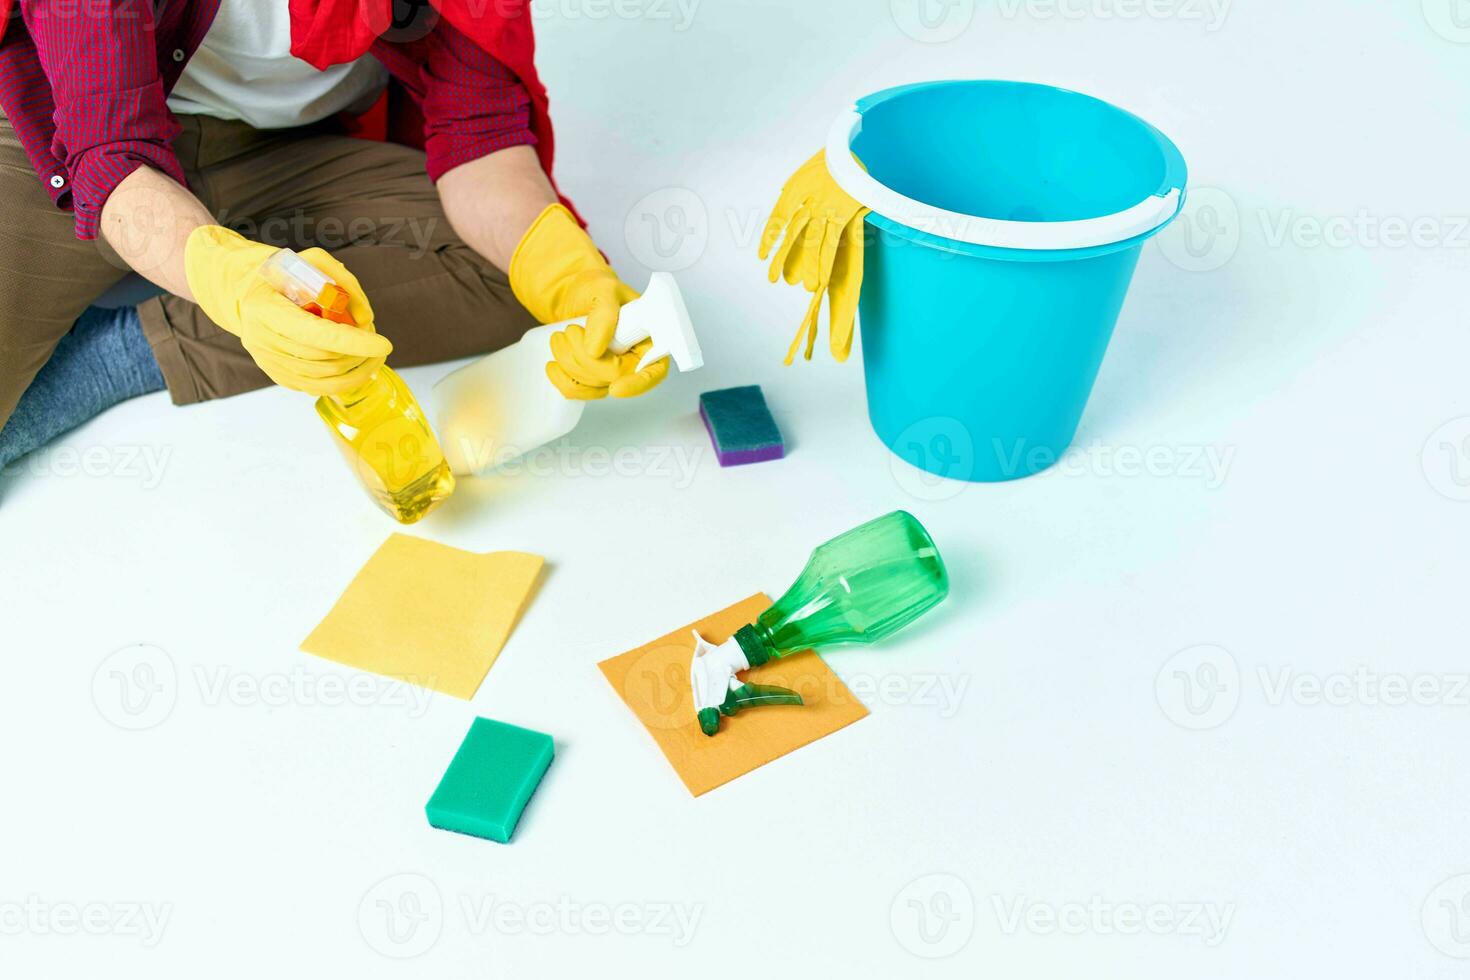 tarefas domésticas estilo de vida quarto interior profissional limpeza estilo de vida tarefas foto